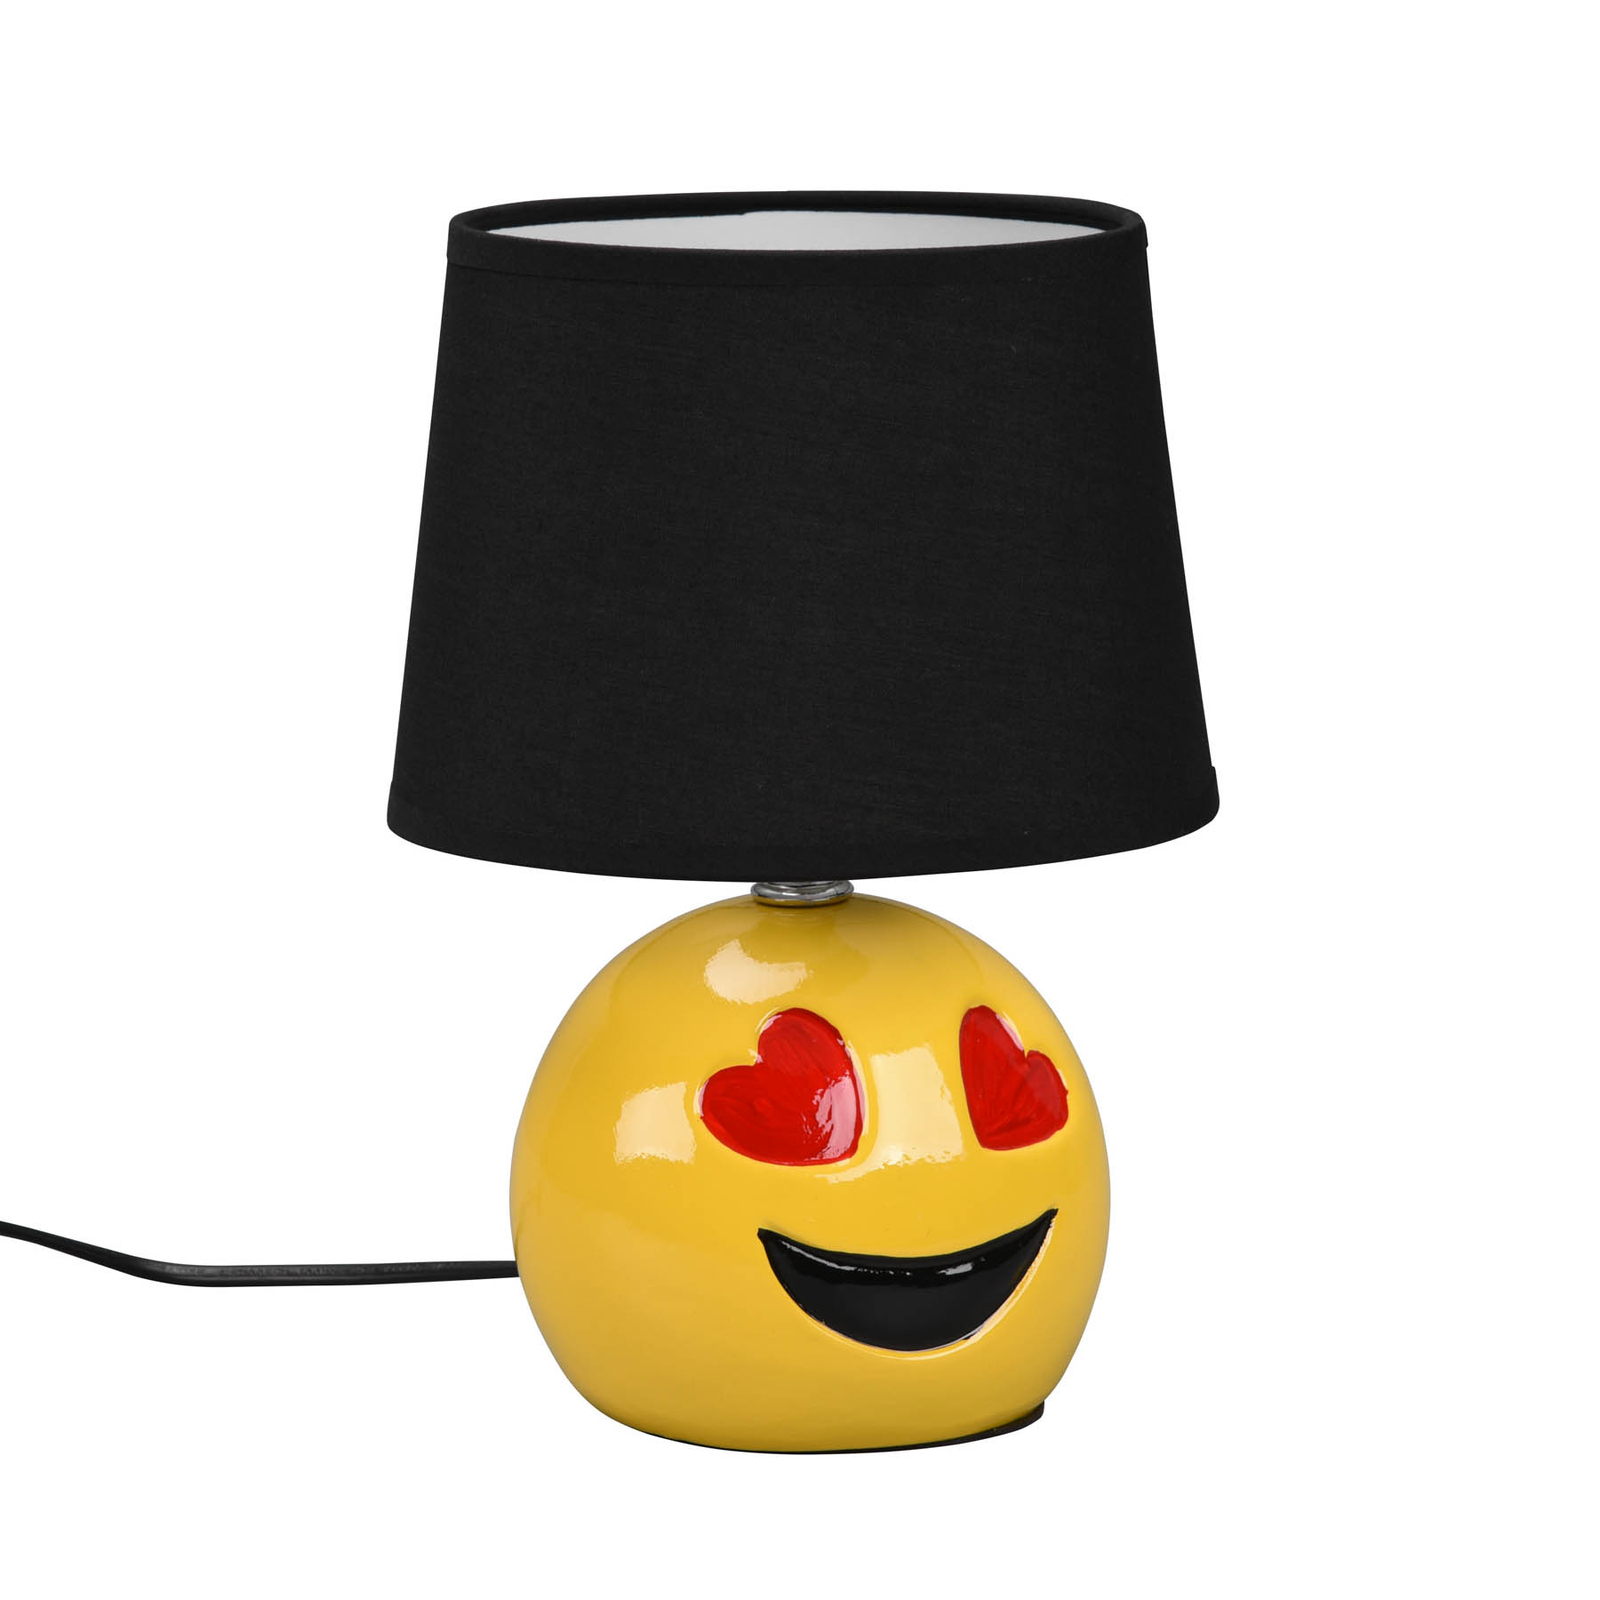 Tafellamp Lovely met Smiley, stoffen kap zwart